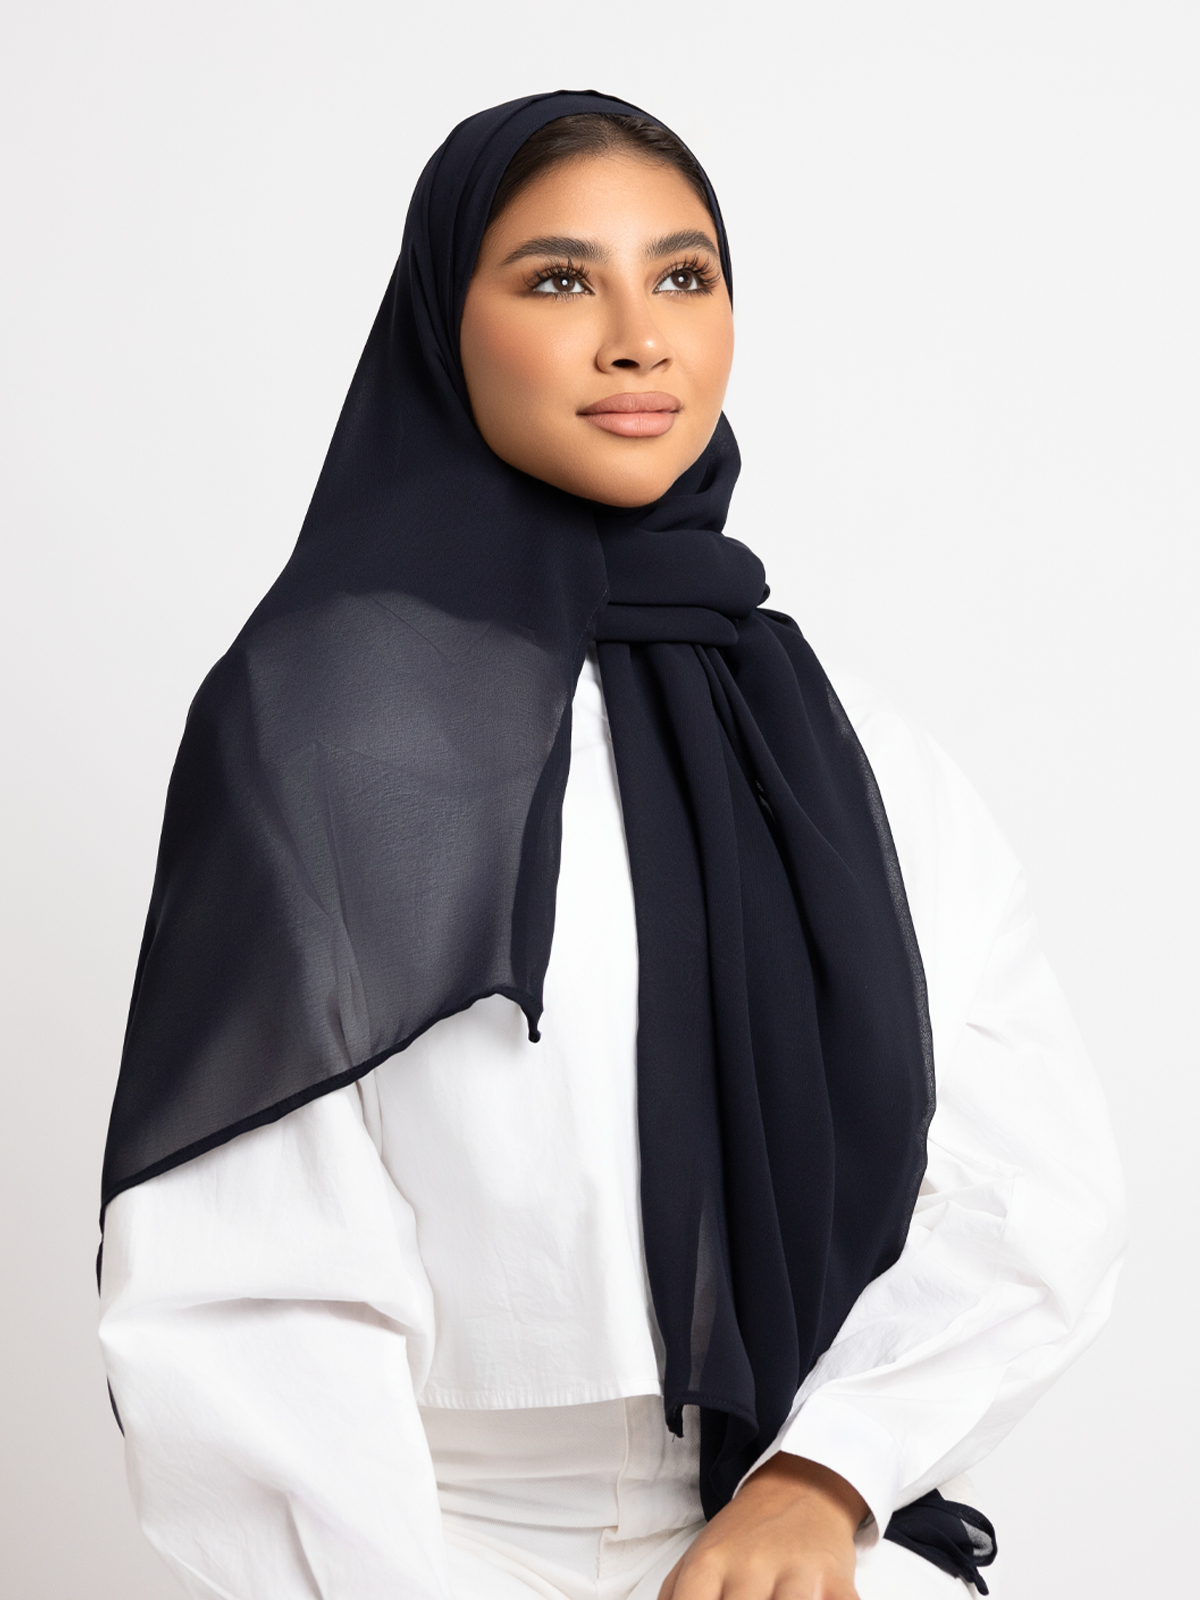 Luxurious chiffon hijab plain tarha 200 cm long blue navy color high quality material online in ksa by kaafmeem